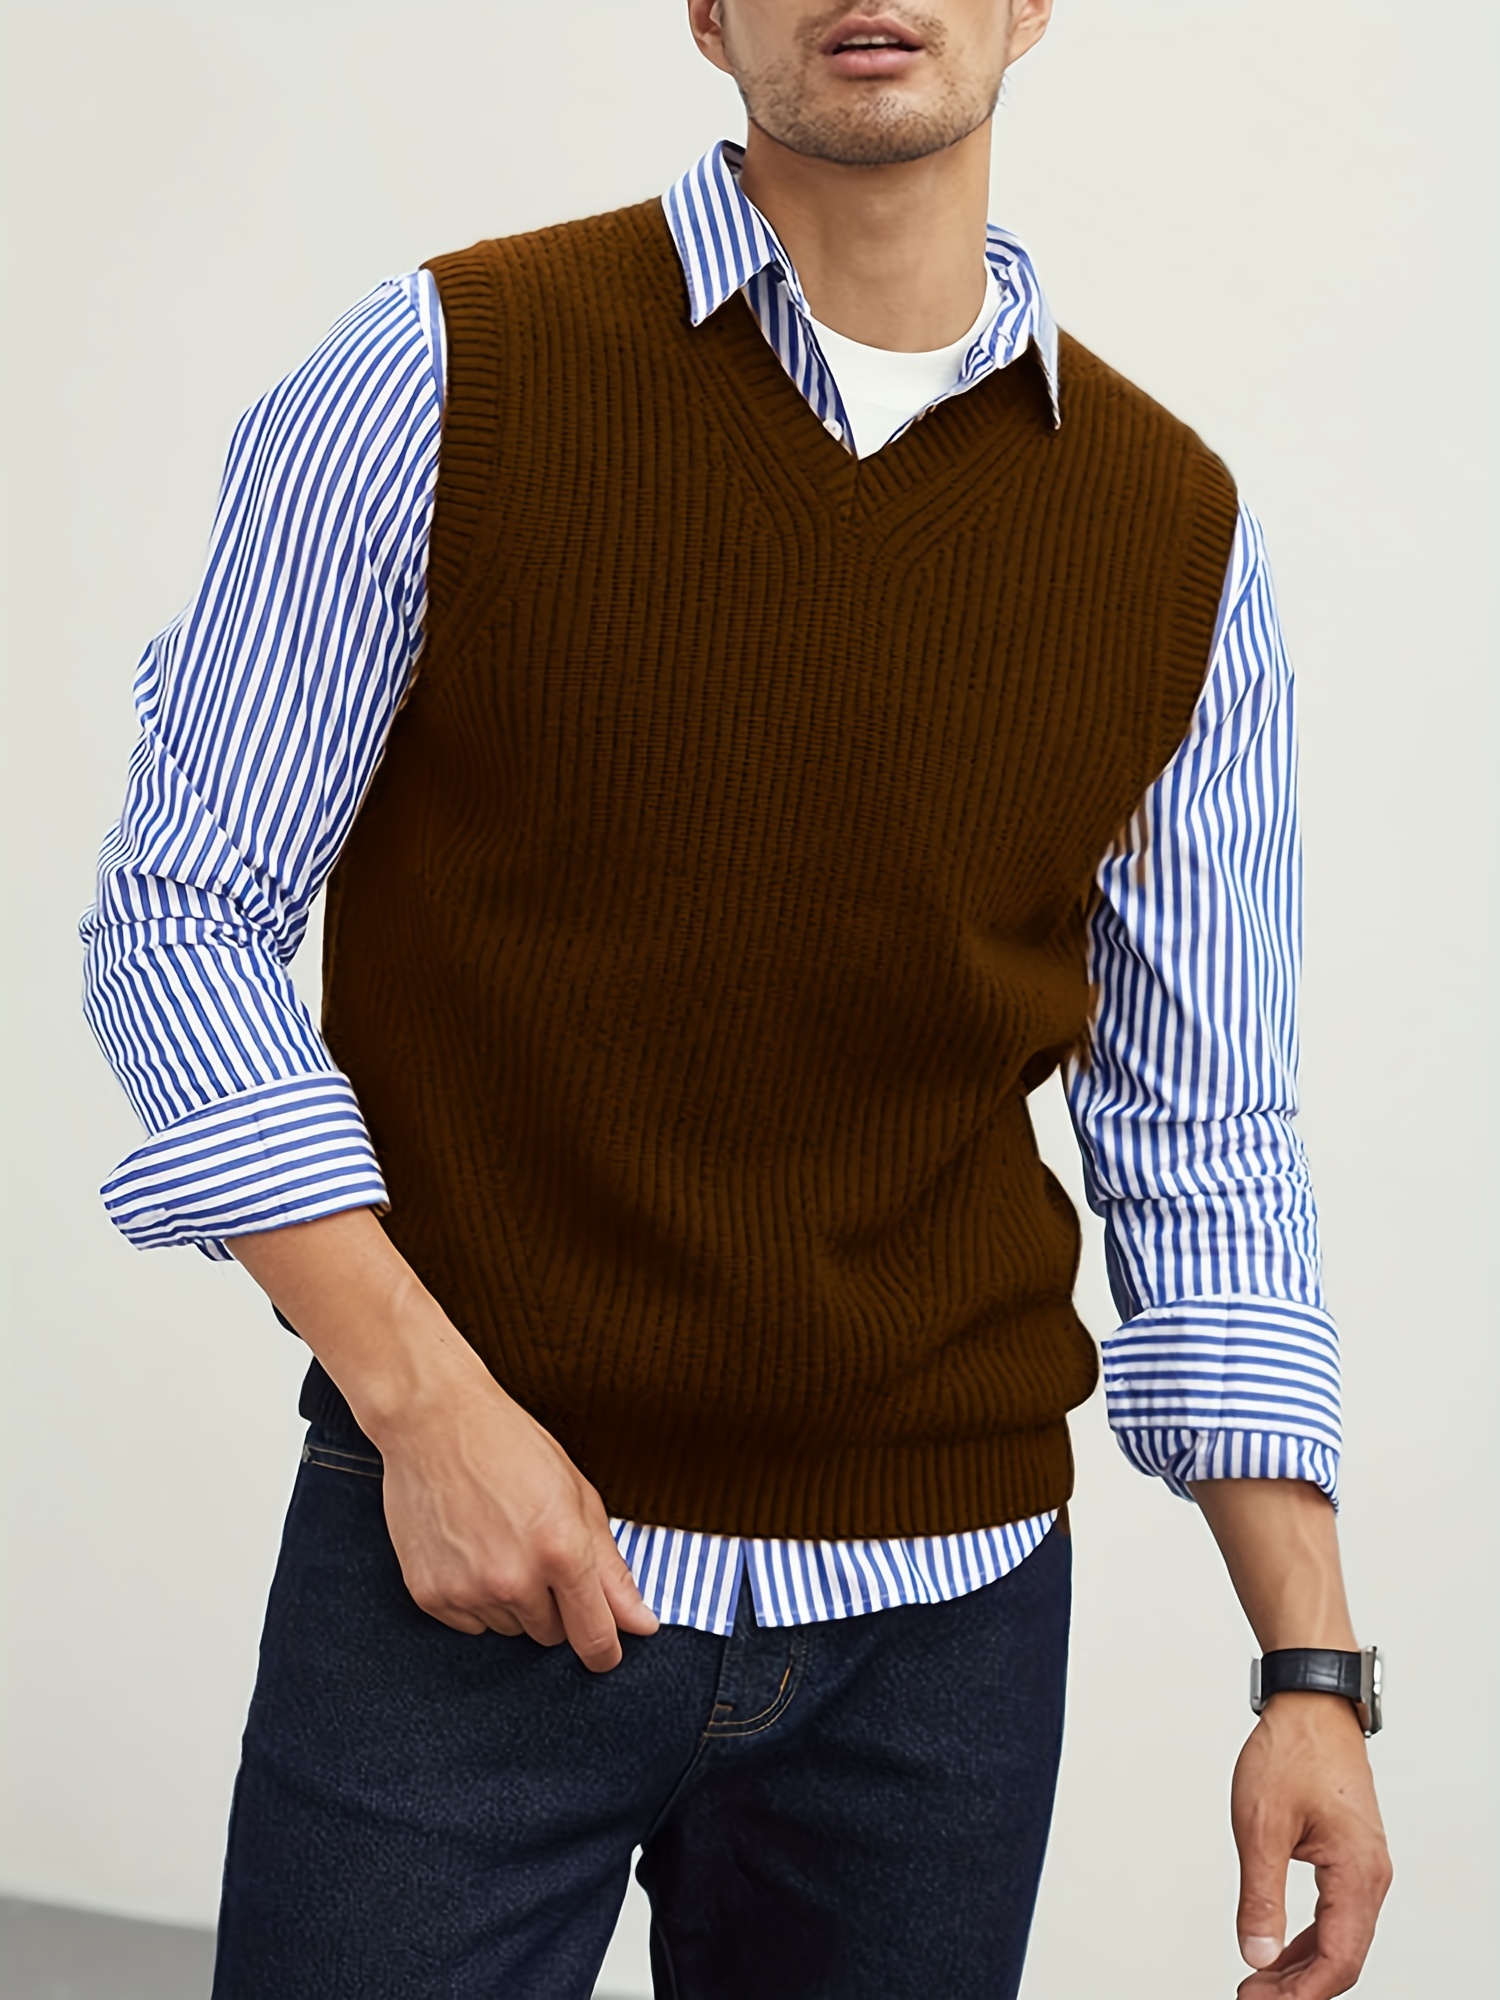 Sleeveless Pullover Tops Sweater Vest Lightweight V-Neck Solid Cotton Vest